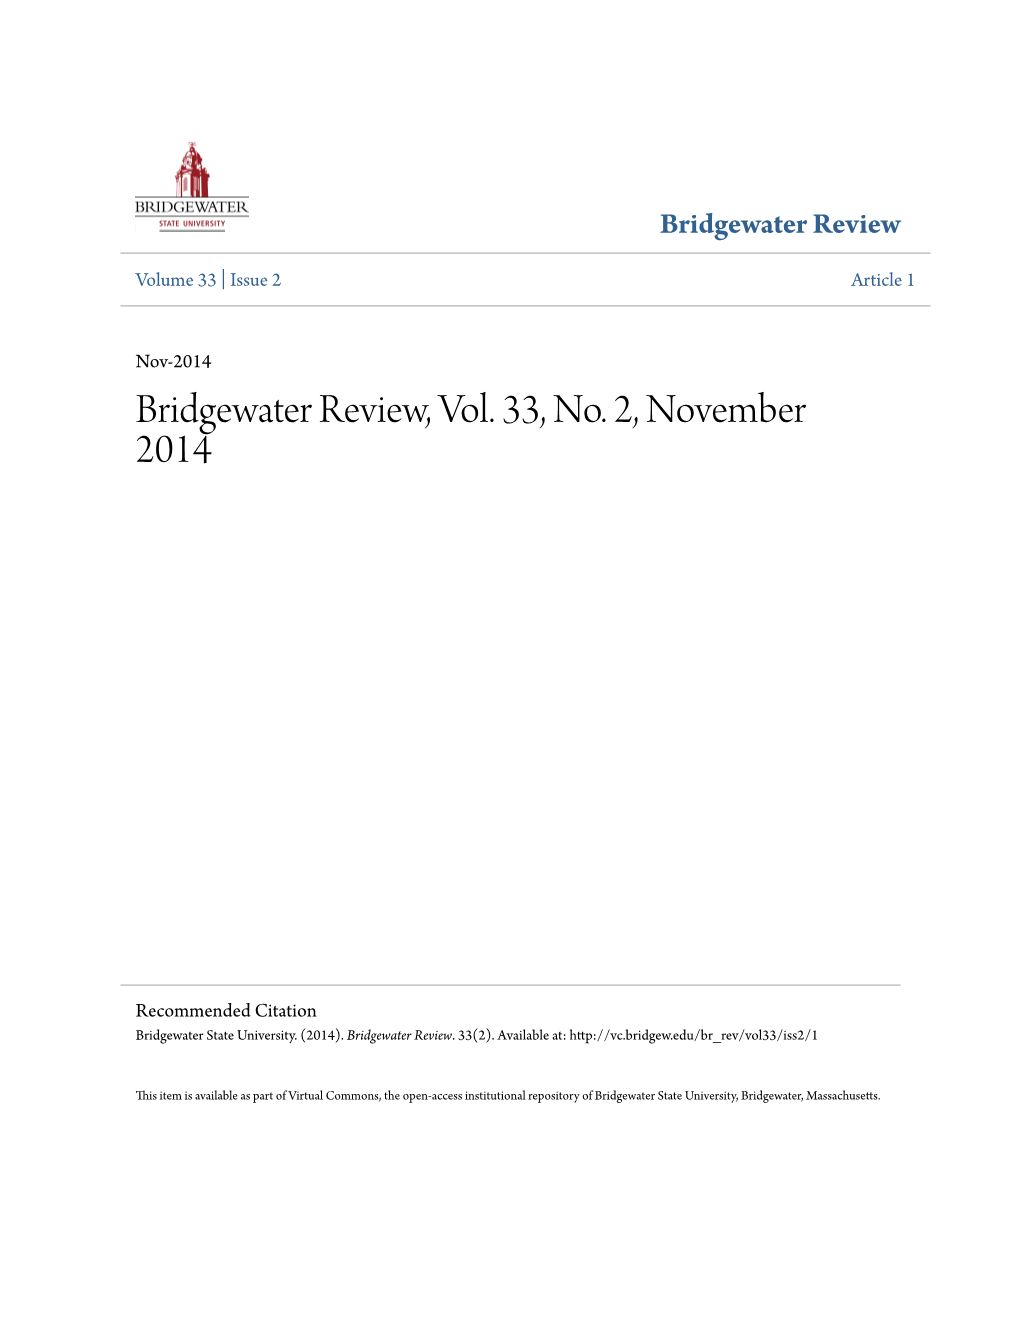 Bridgewater Review, Vol. 33, No. 2, November 2014